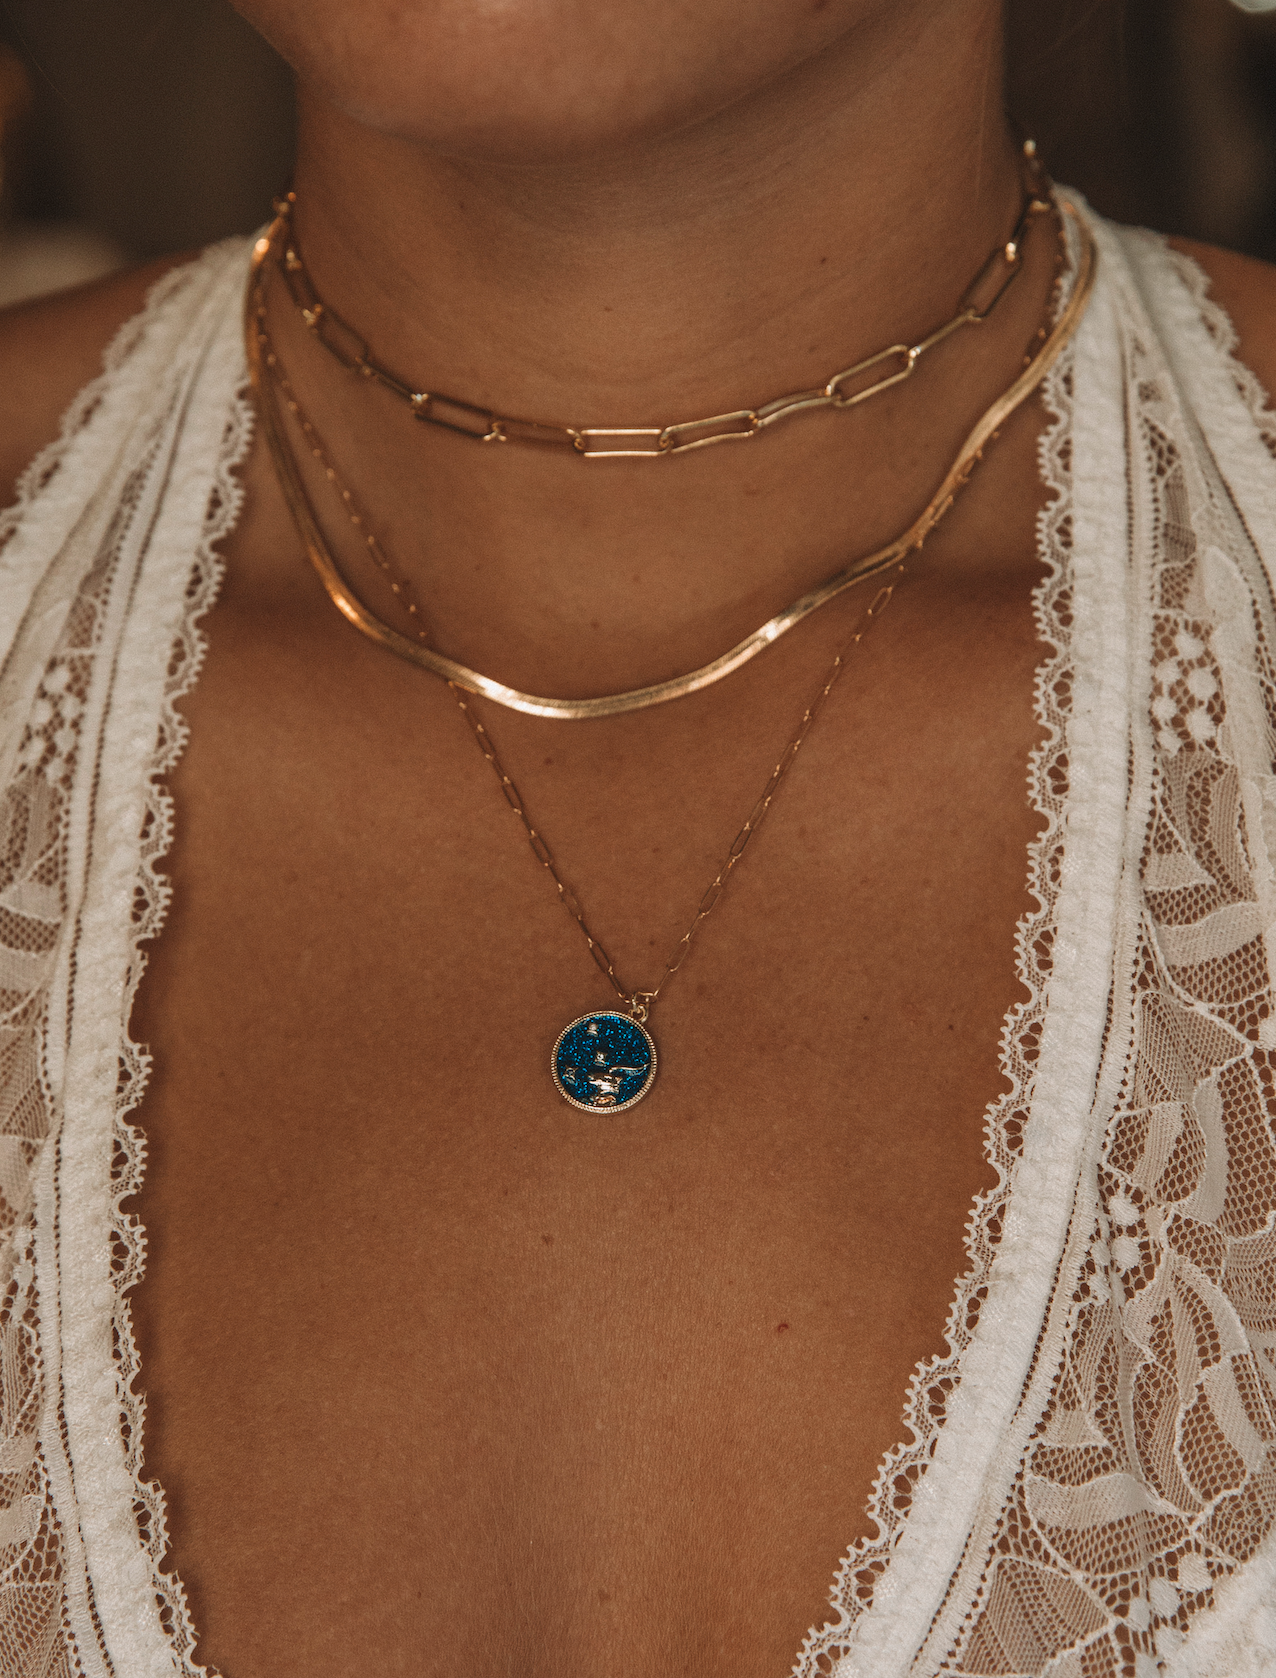 The Blue Zodiac Necklace